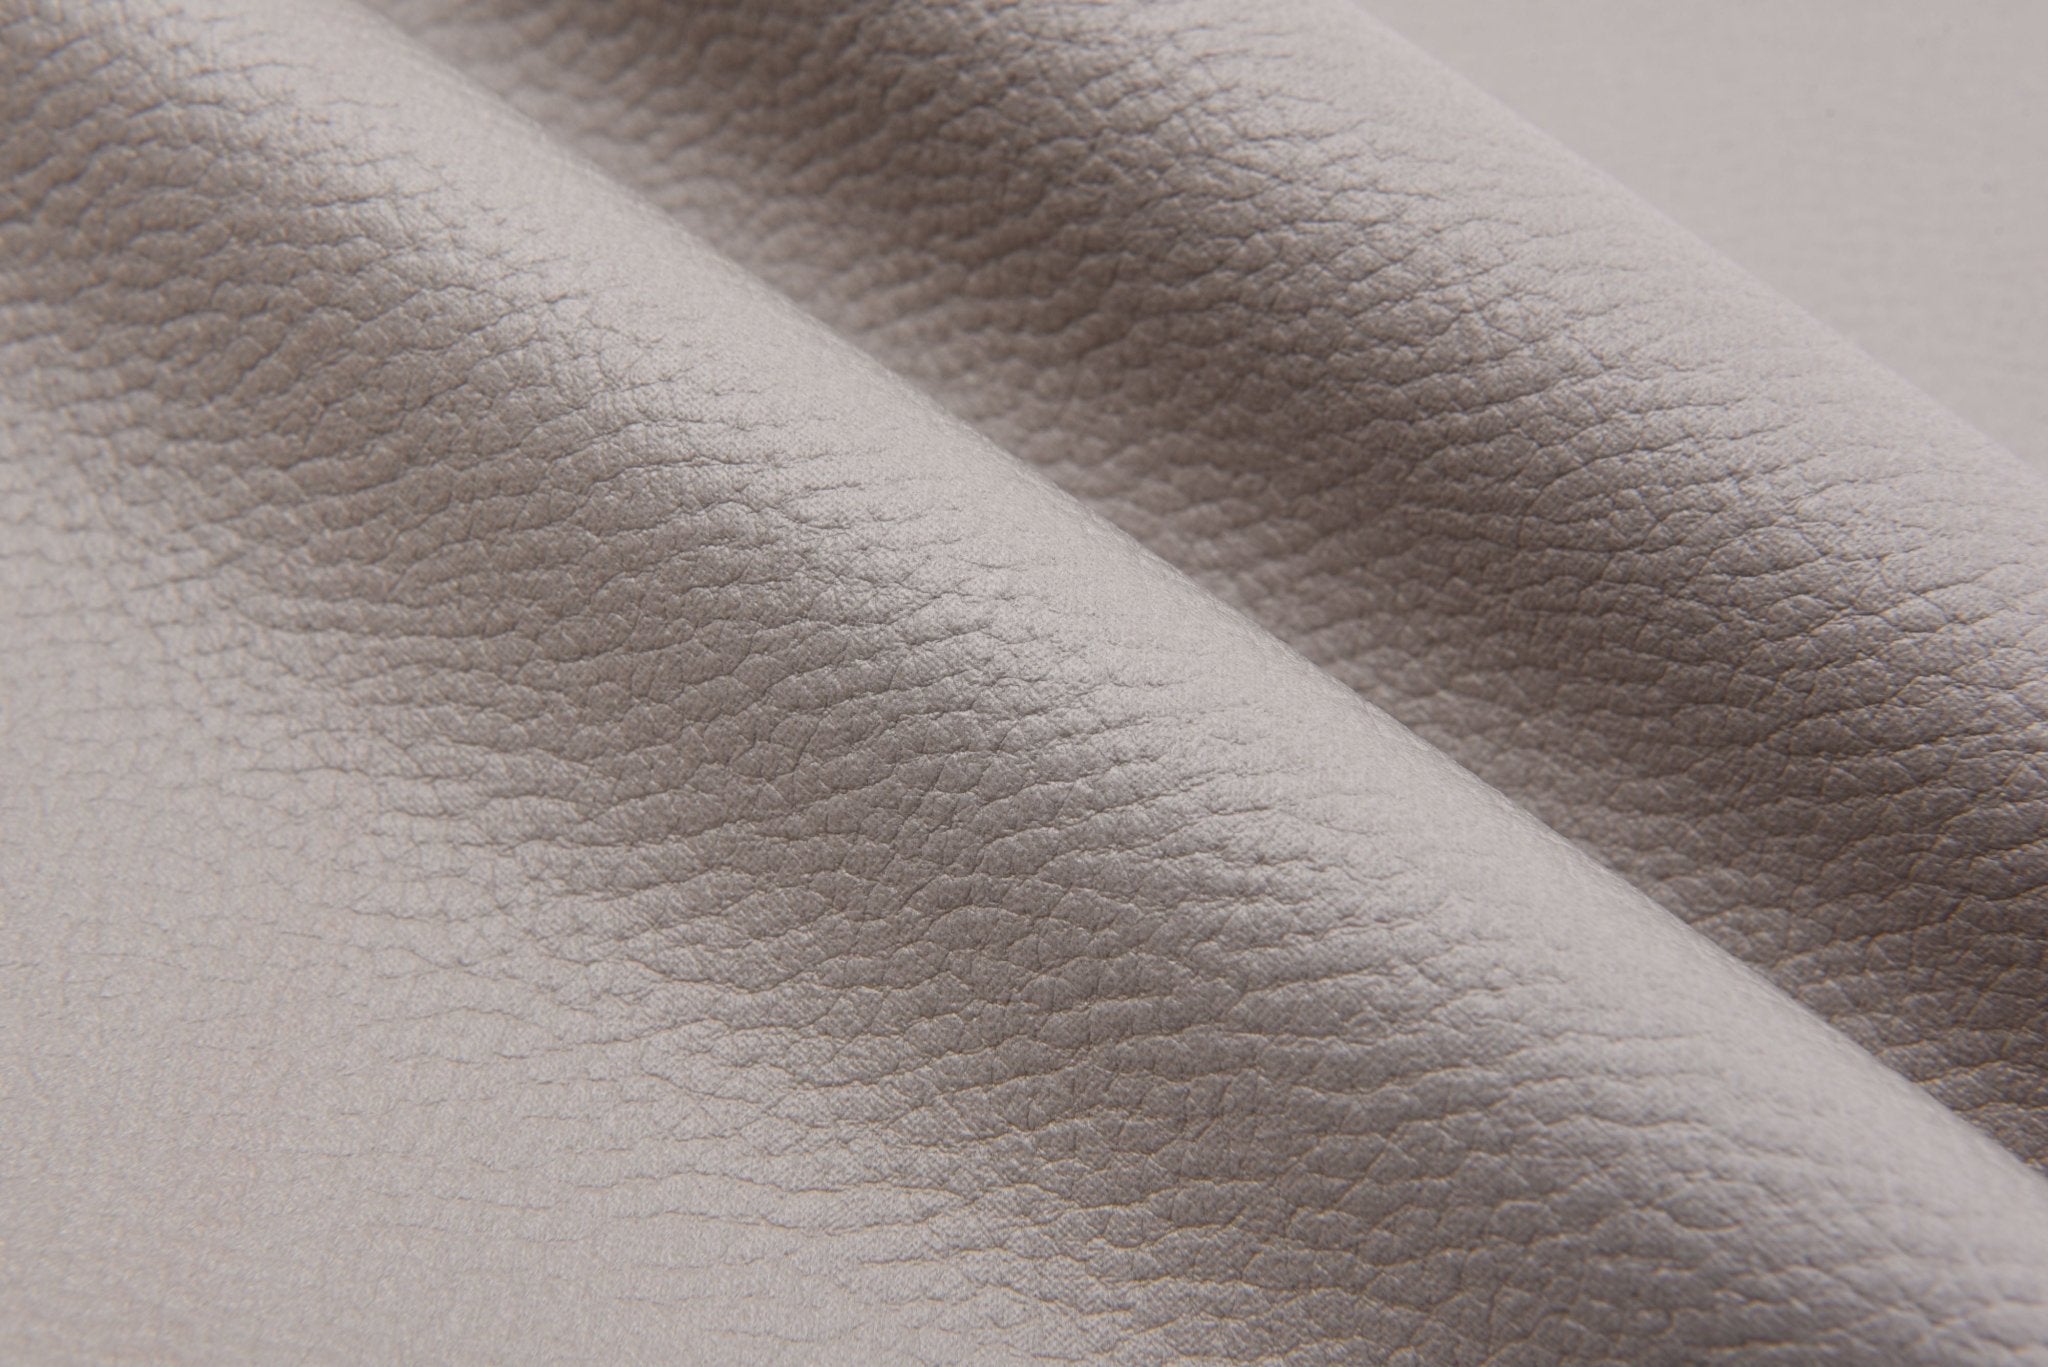 HHF Elegancia White - Upholstery Leather